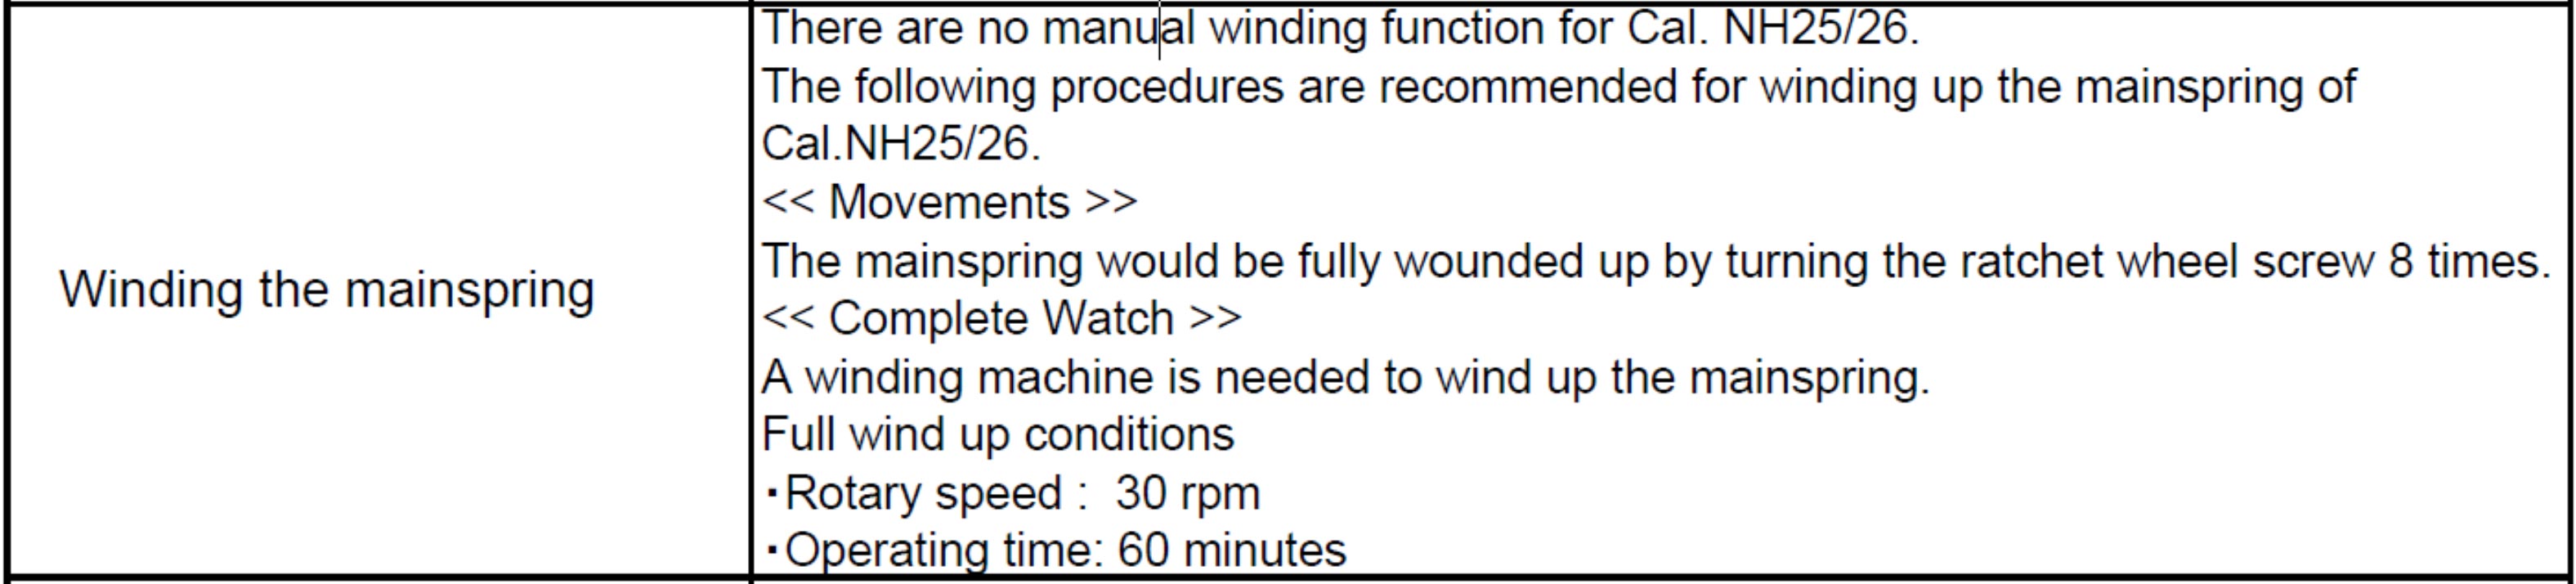 Seiko Nh25a Manual Winding